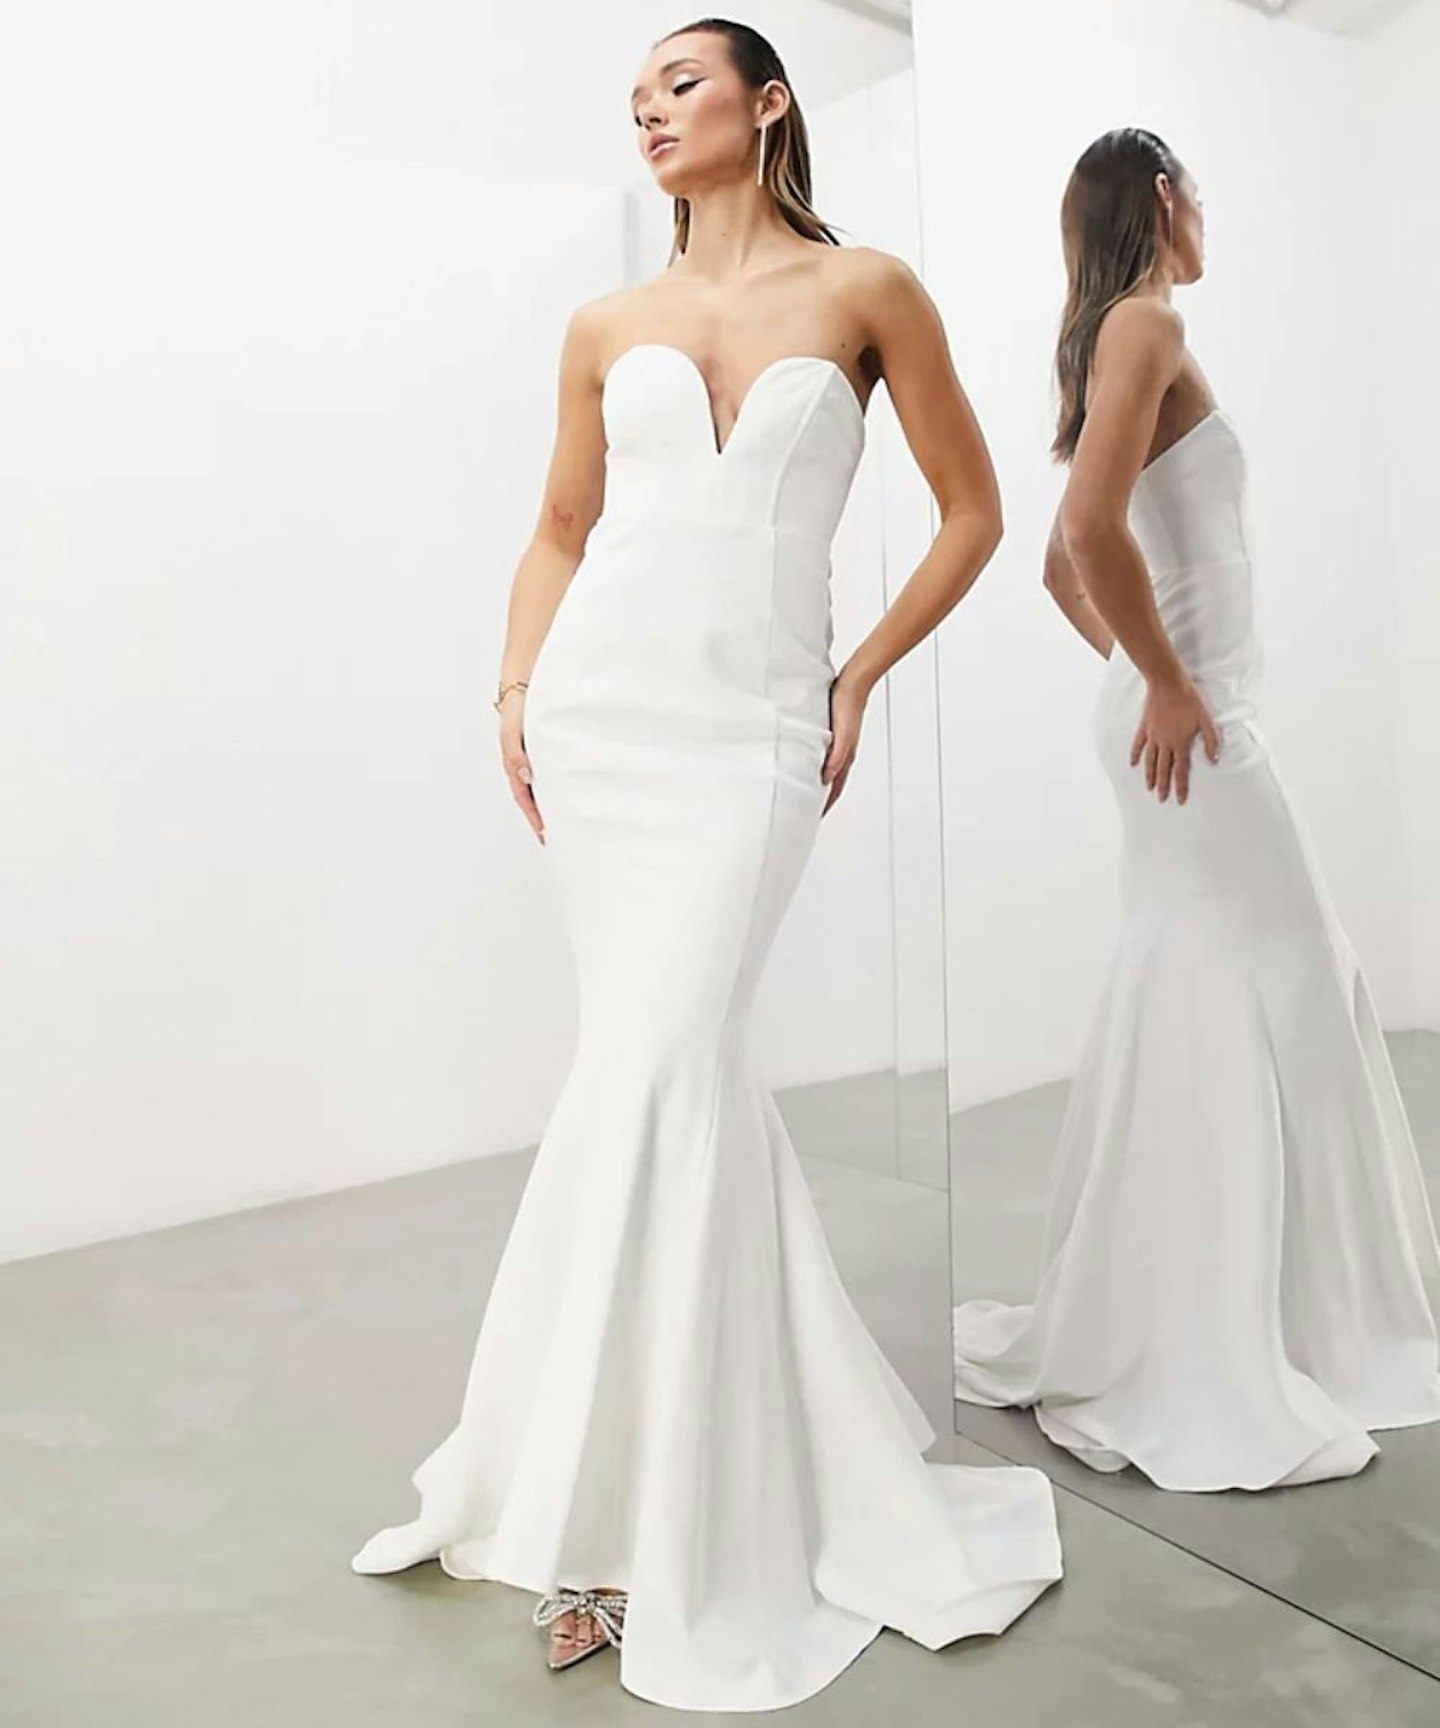 ASOS EDITION Etta Crepe Sculpted Bandeau Maxi Wedding Dress - Ivory